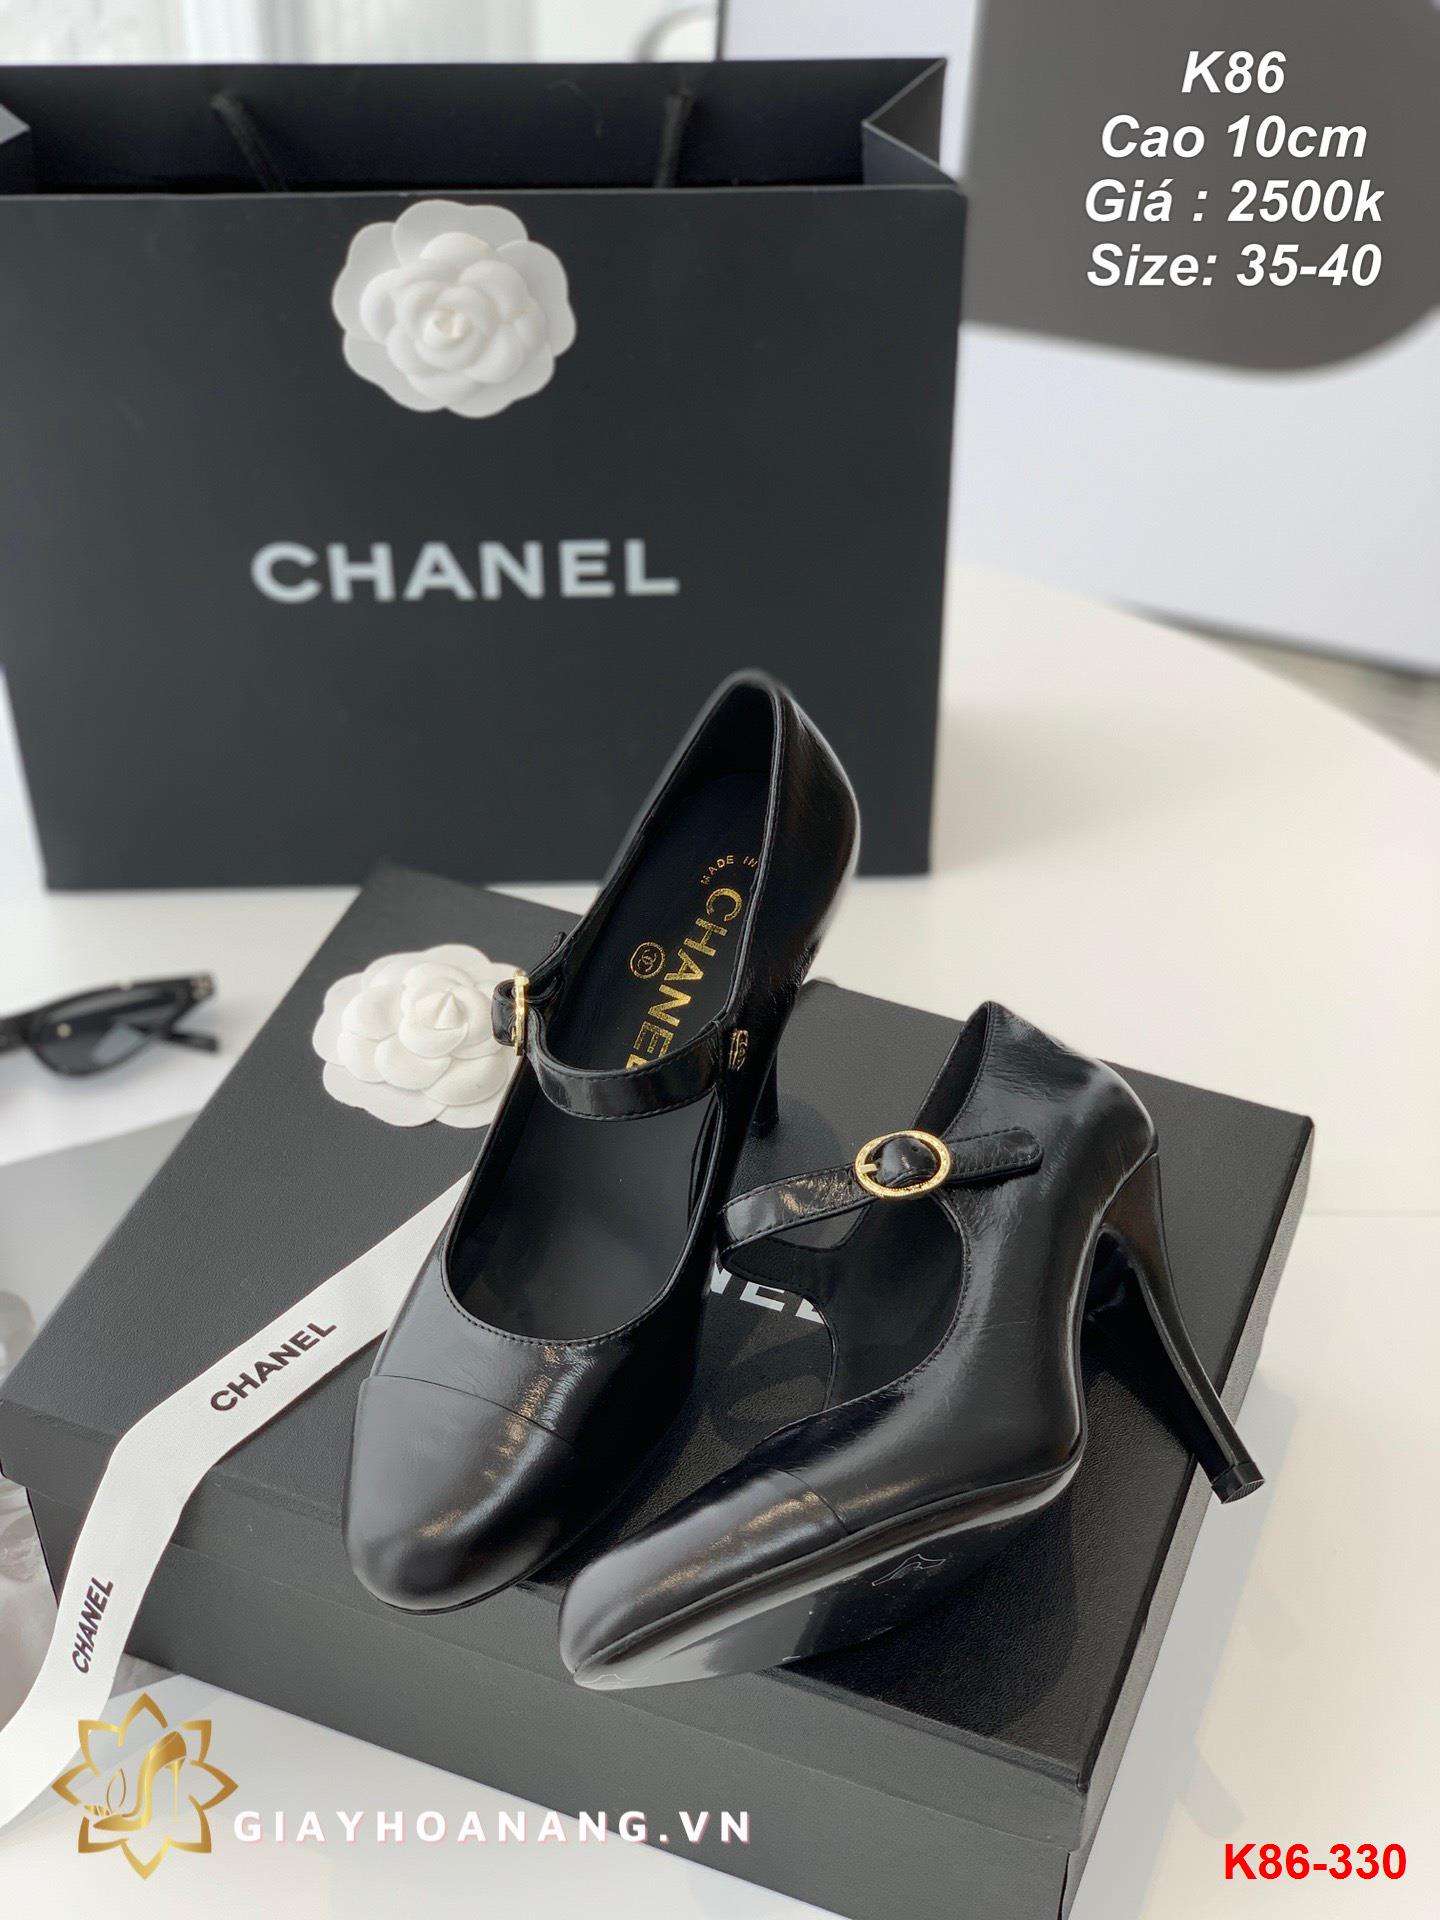 K86-330 Chanel giày cao 10cm siêu cấp